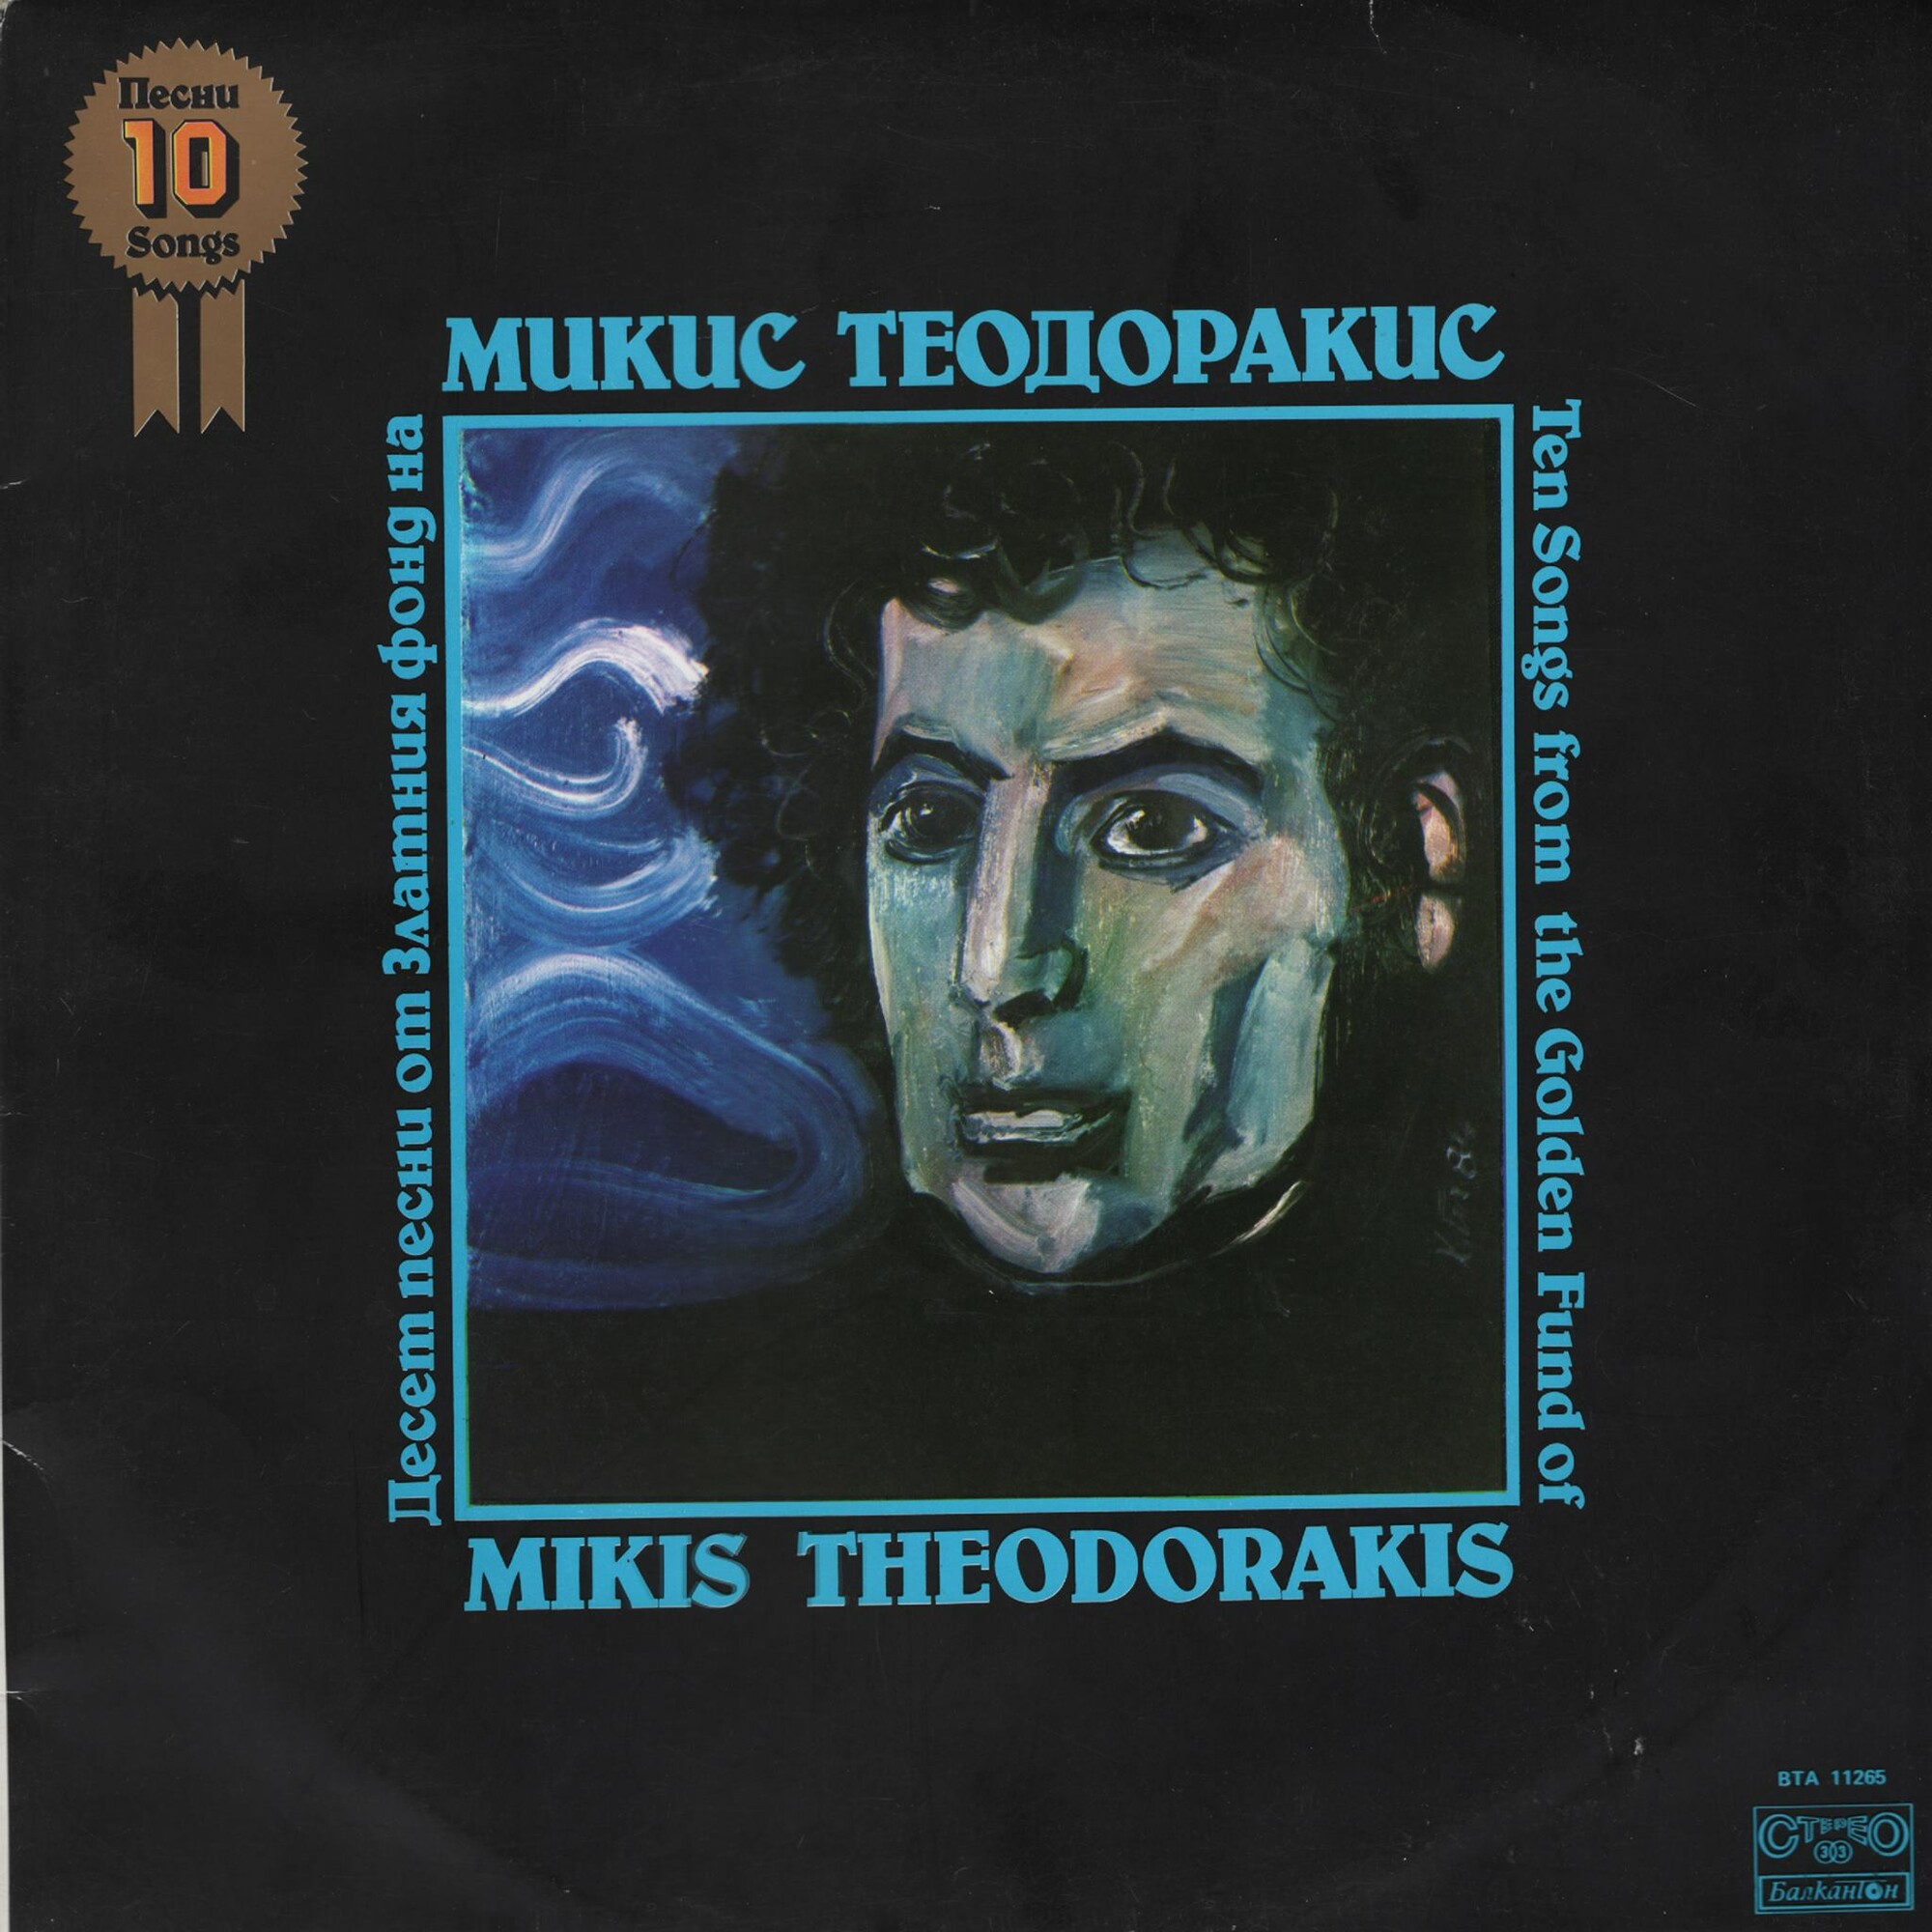 Десет песни от Златния фонд на Микис Теодоракис